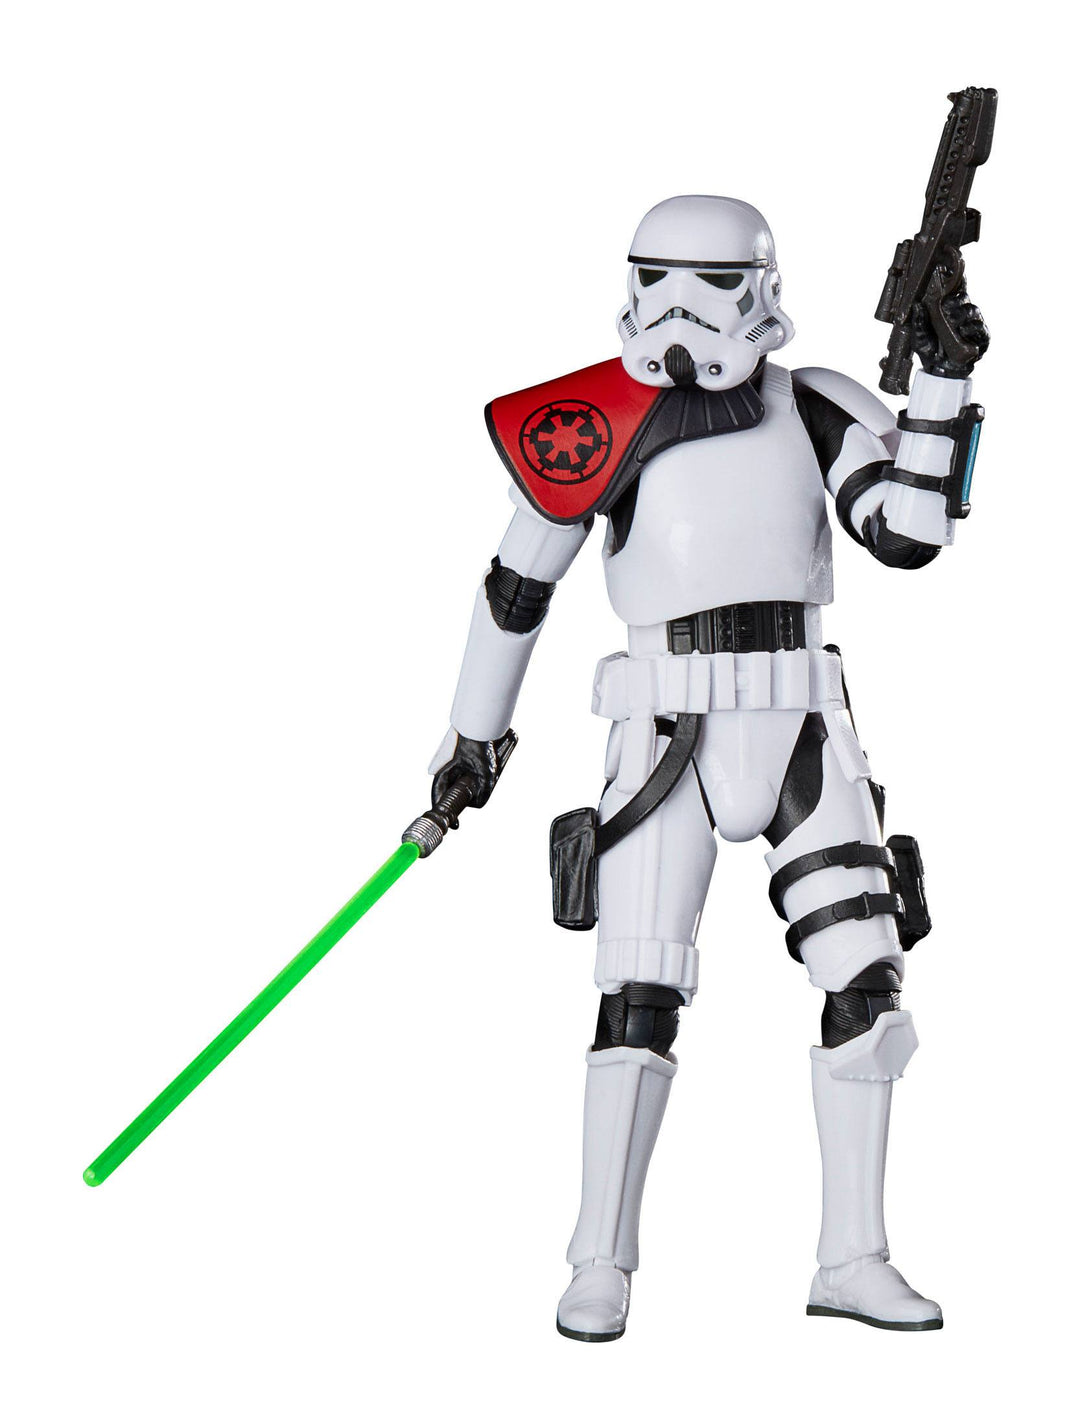 Hasbro Star Wars The Black Series Sergeant Kreel Action Figure